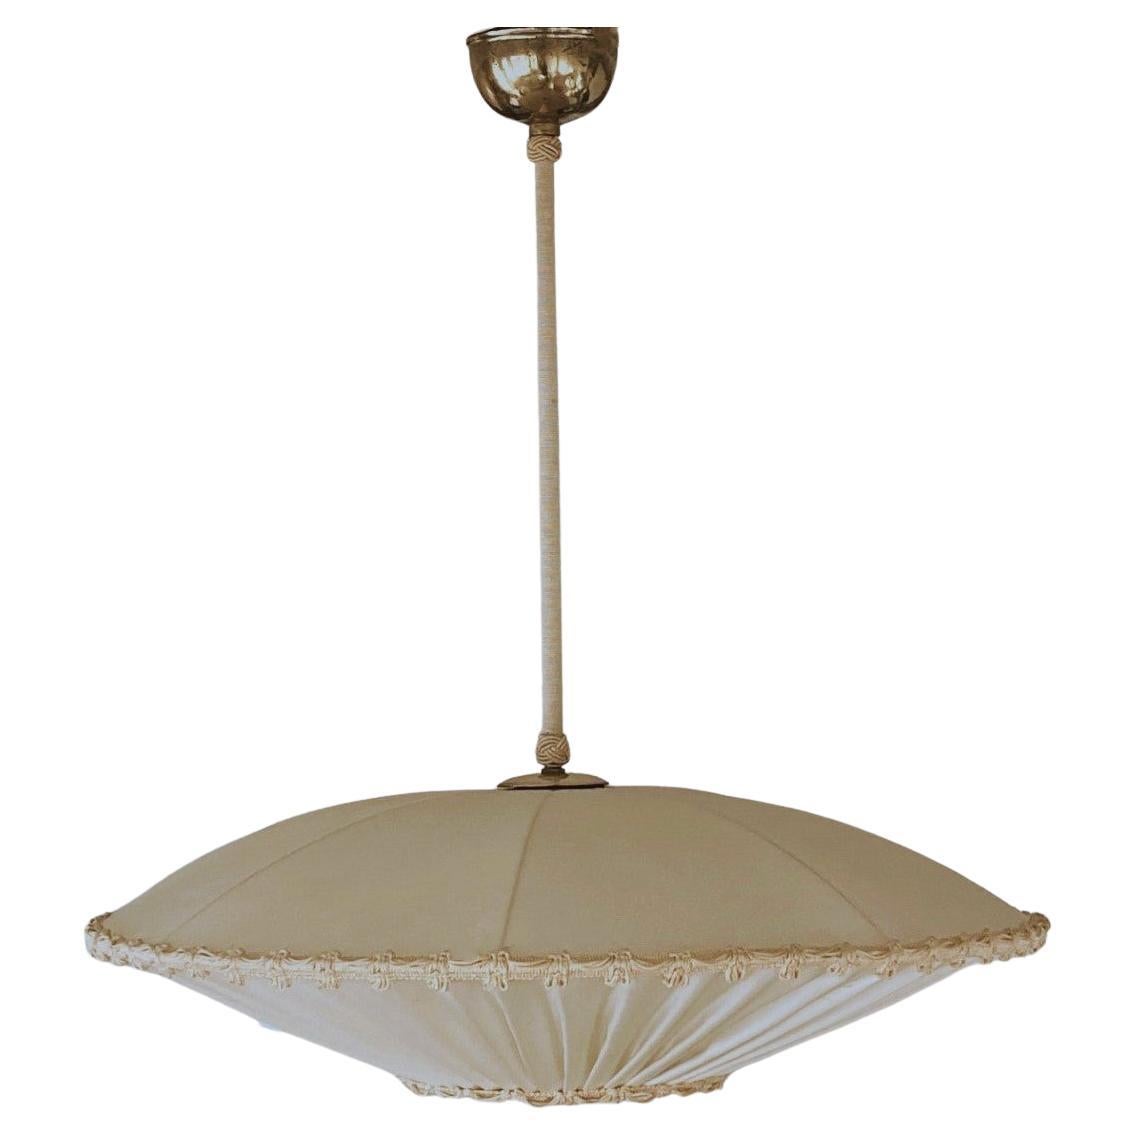 Midcentury Swedish Design Silk Brass Pendant Ceiling Light, Sweden, 1940s For Sale 4